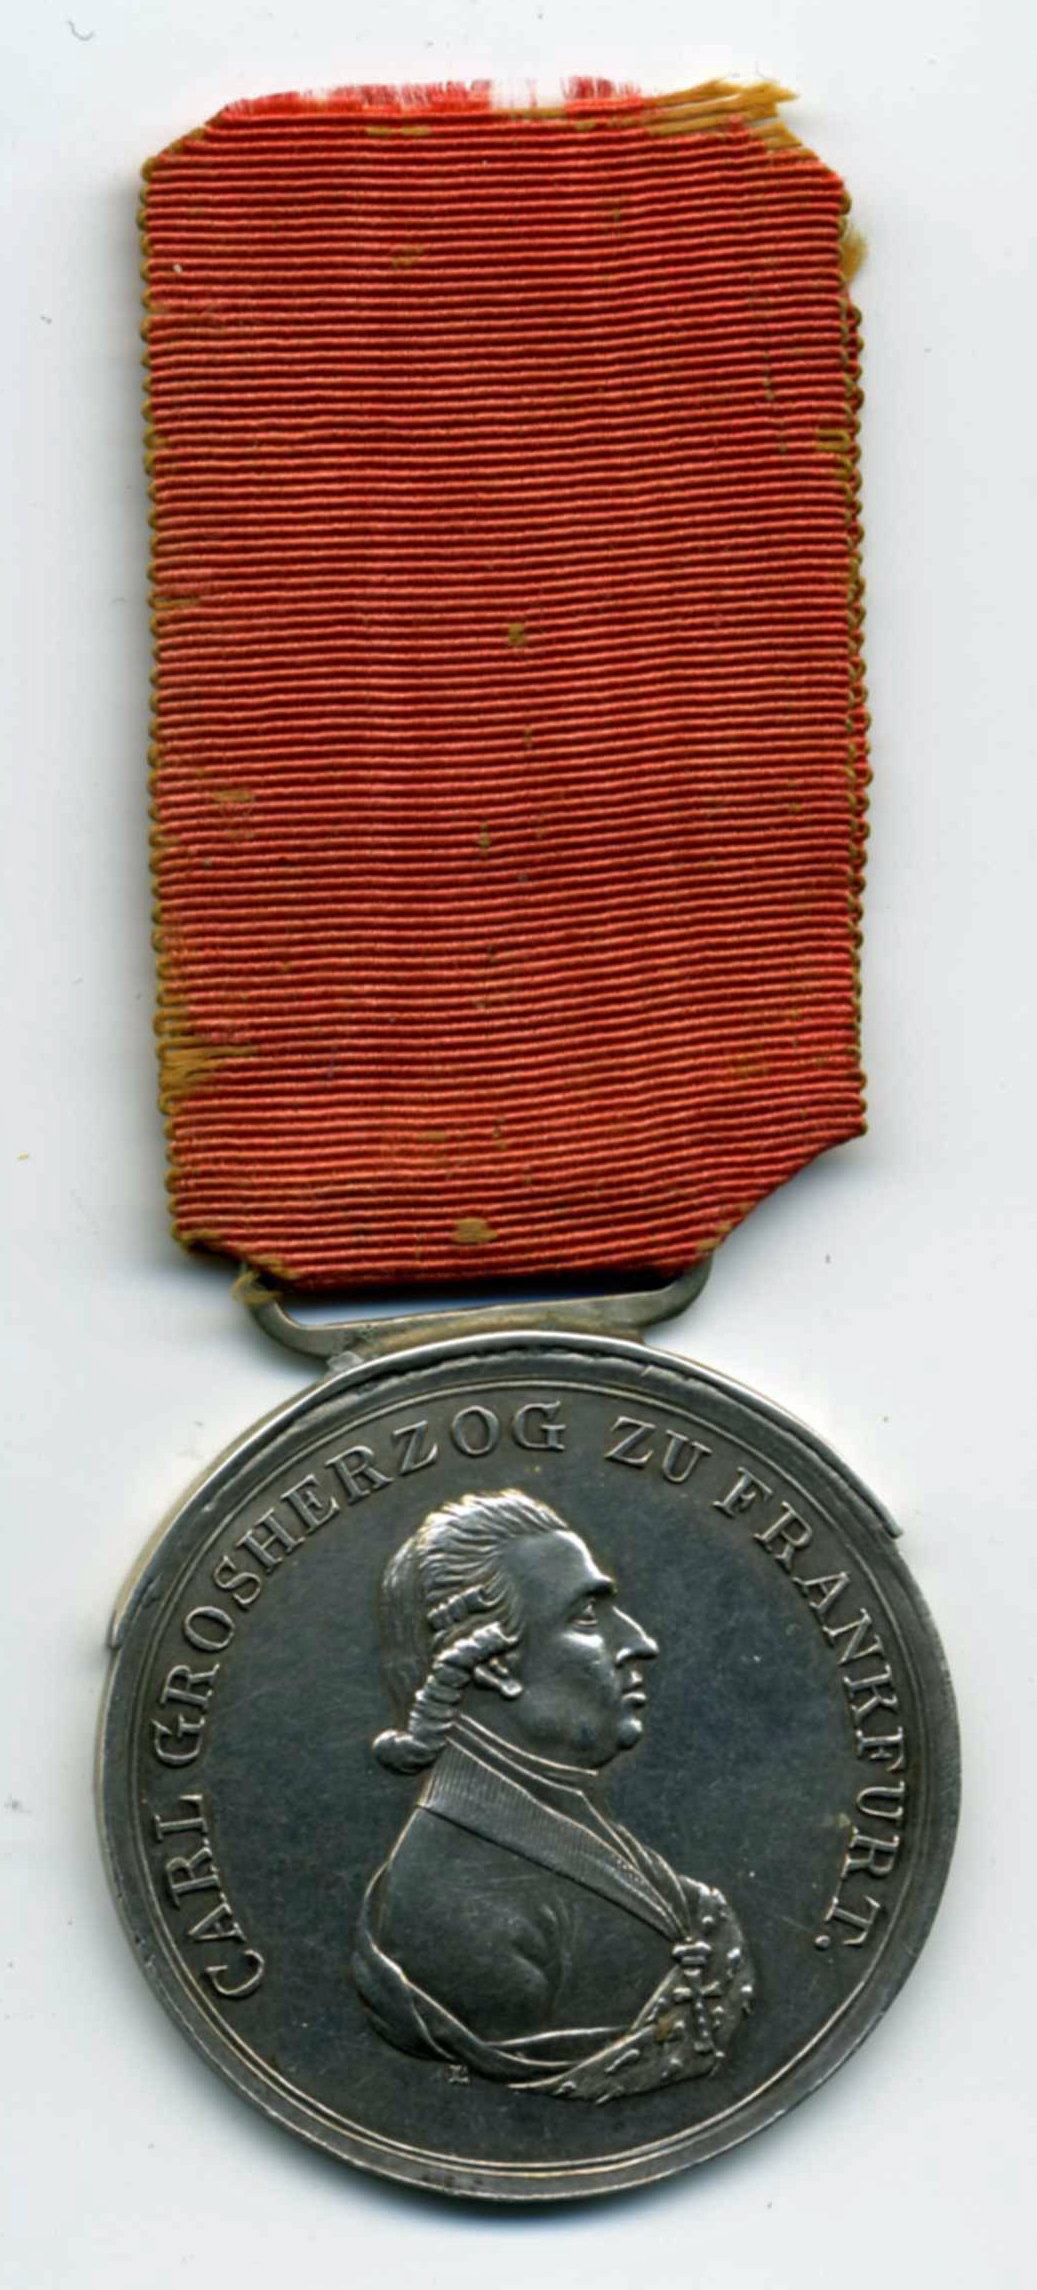 Frankfurt Honor Medal 1809 2nd type avers